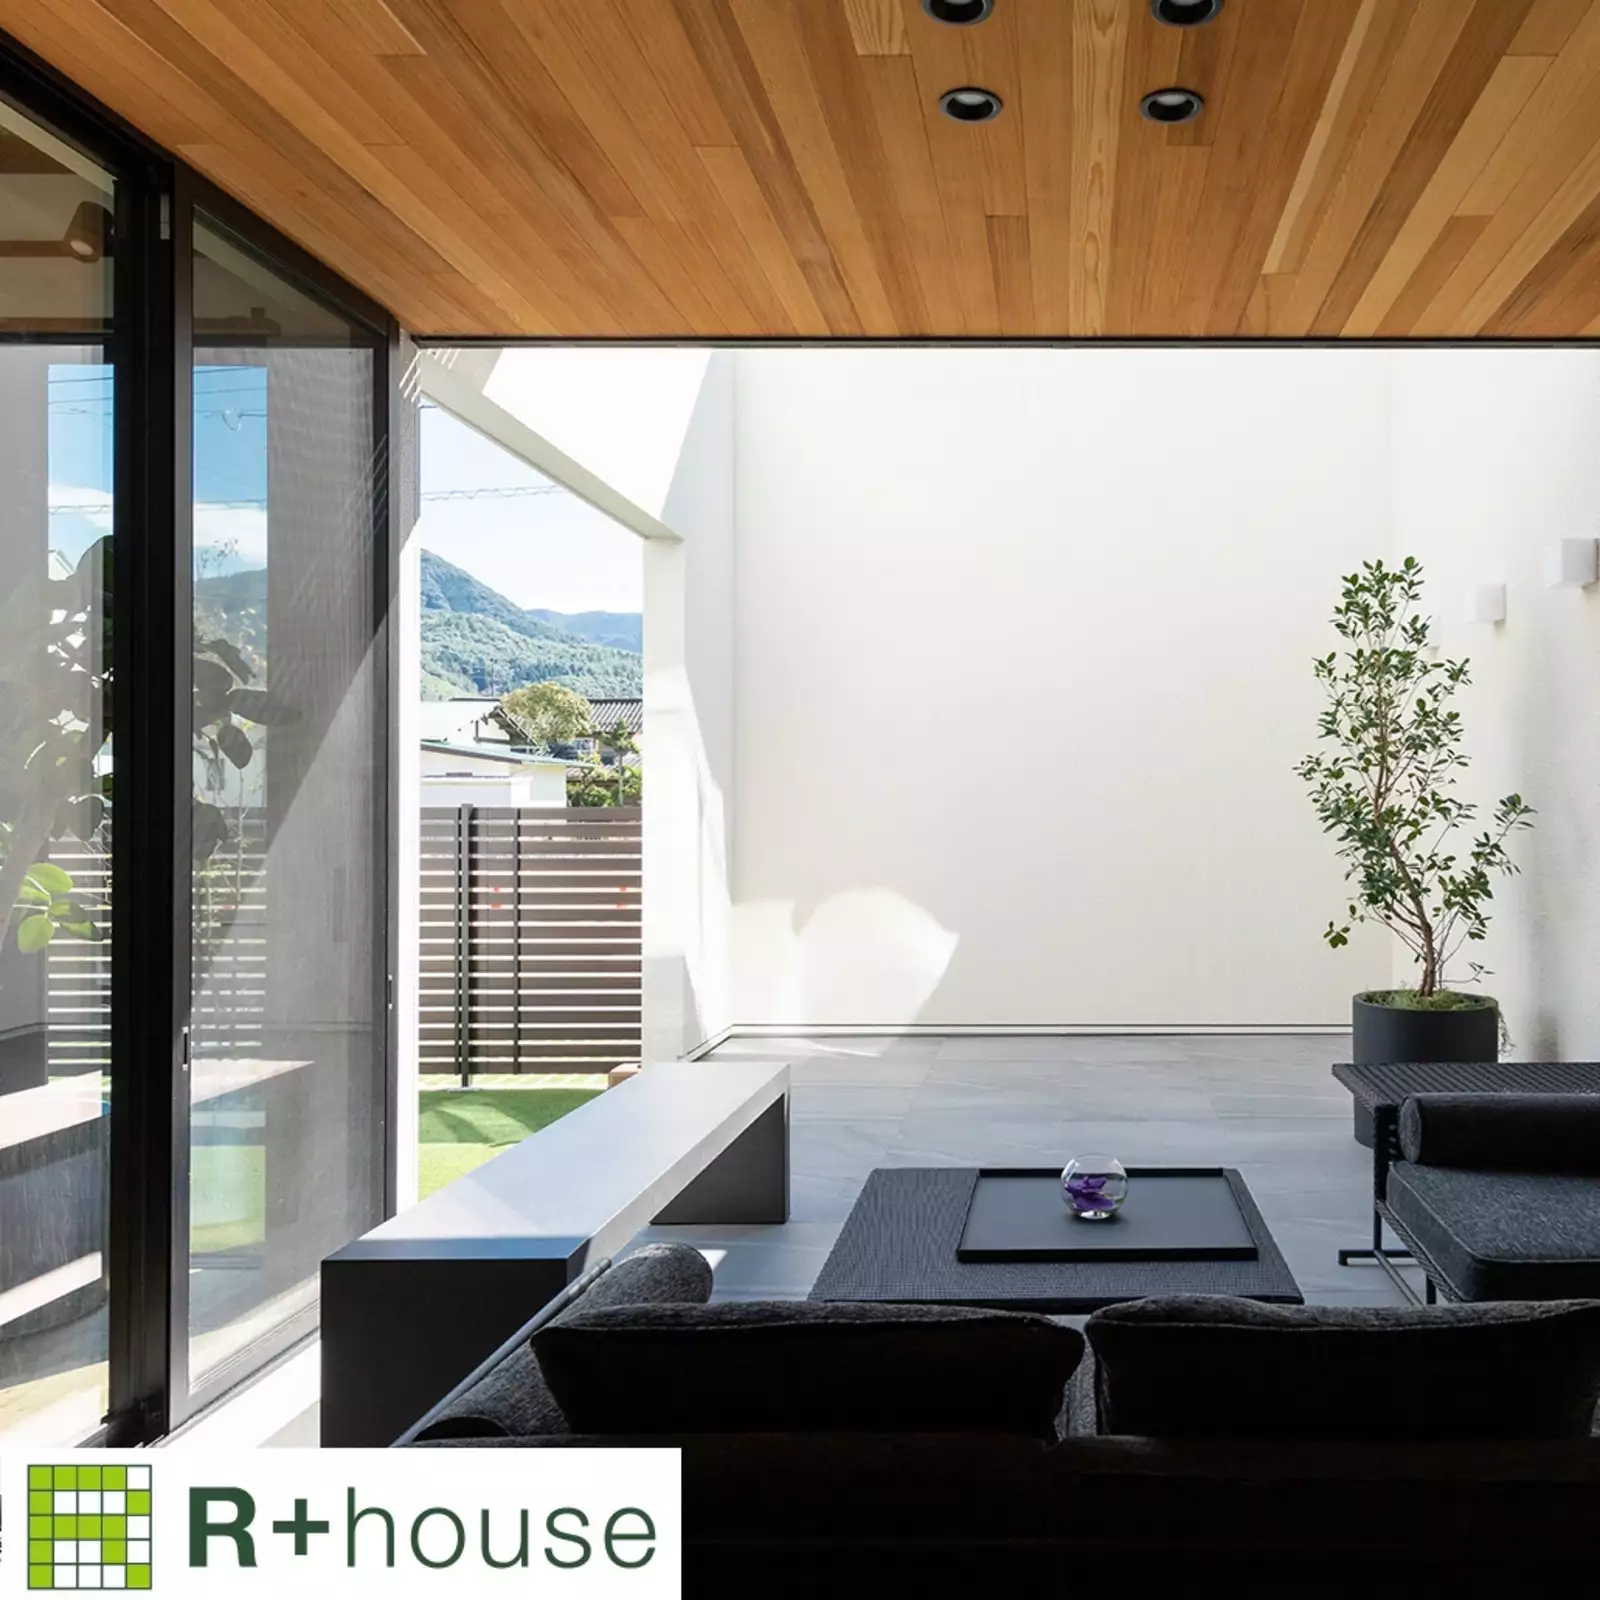 R+houseの物件のテラスの写真です。手前側には屋根があり家具を置き、外側は吹き抜けに。さらに左に出ると芝の庭がある。